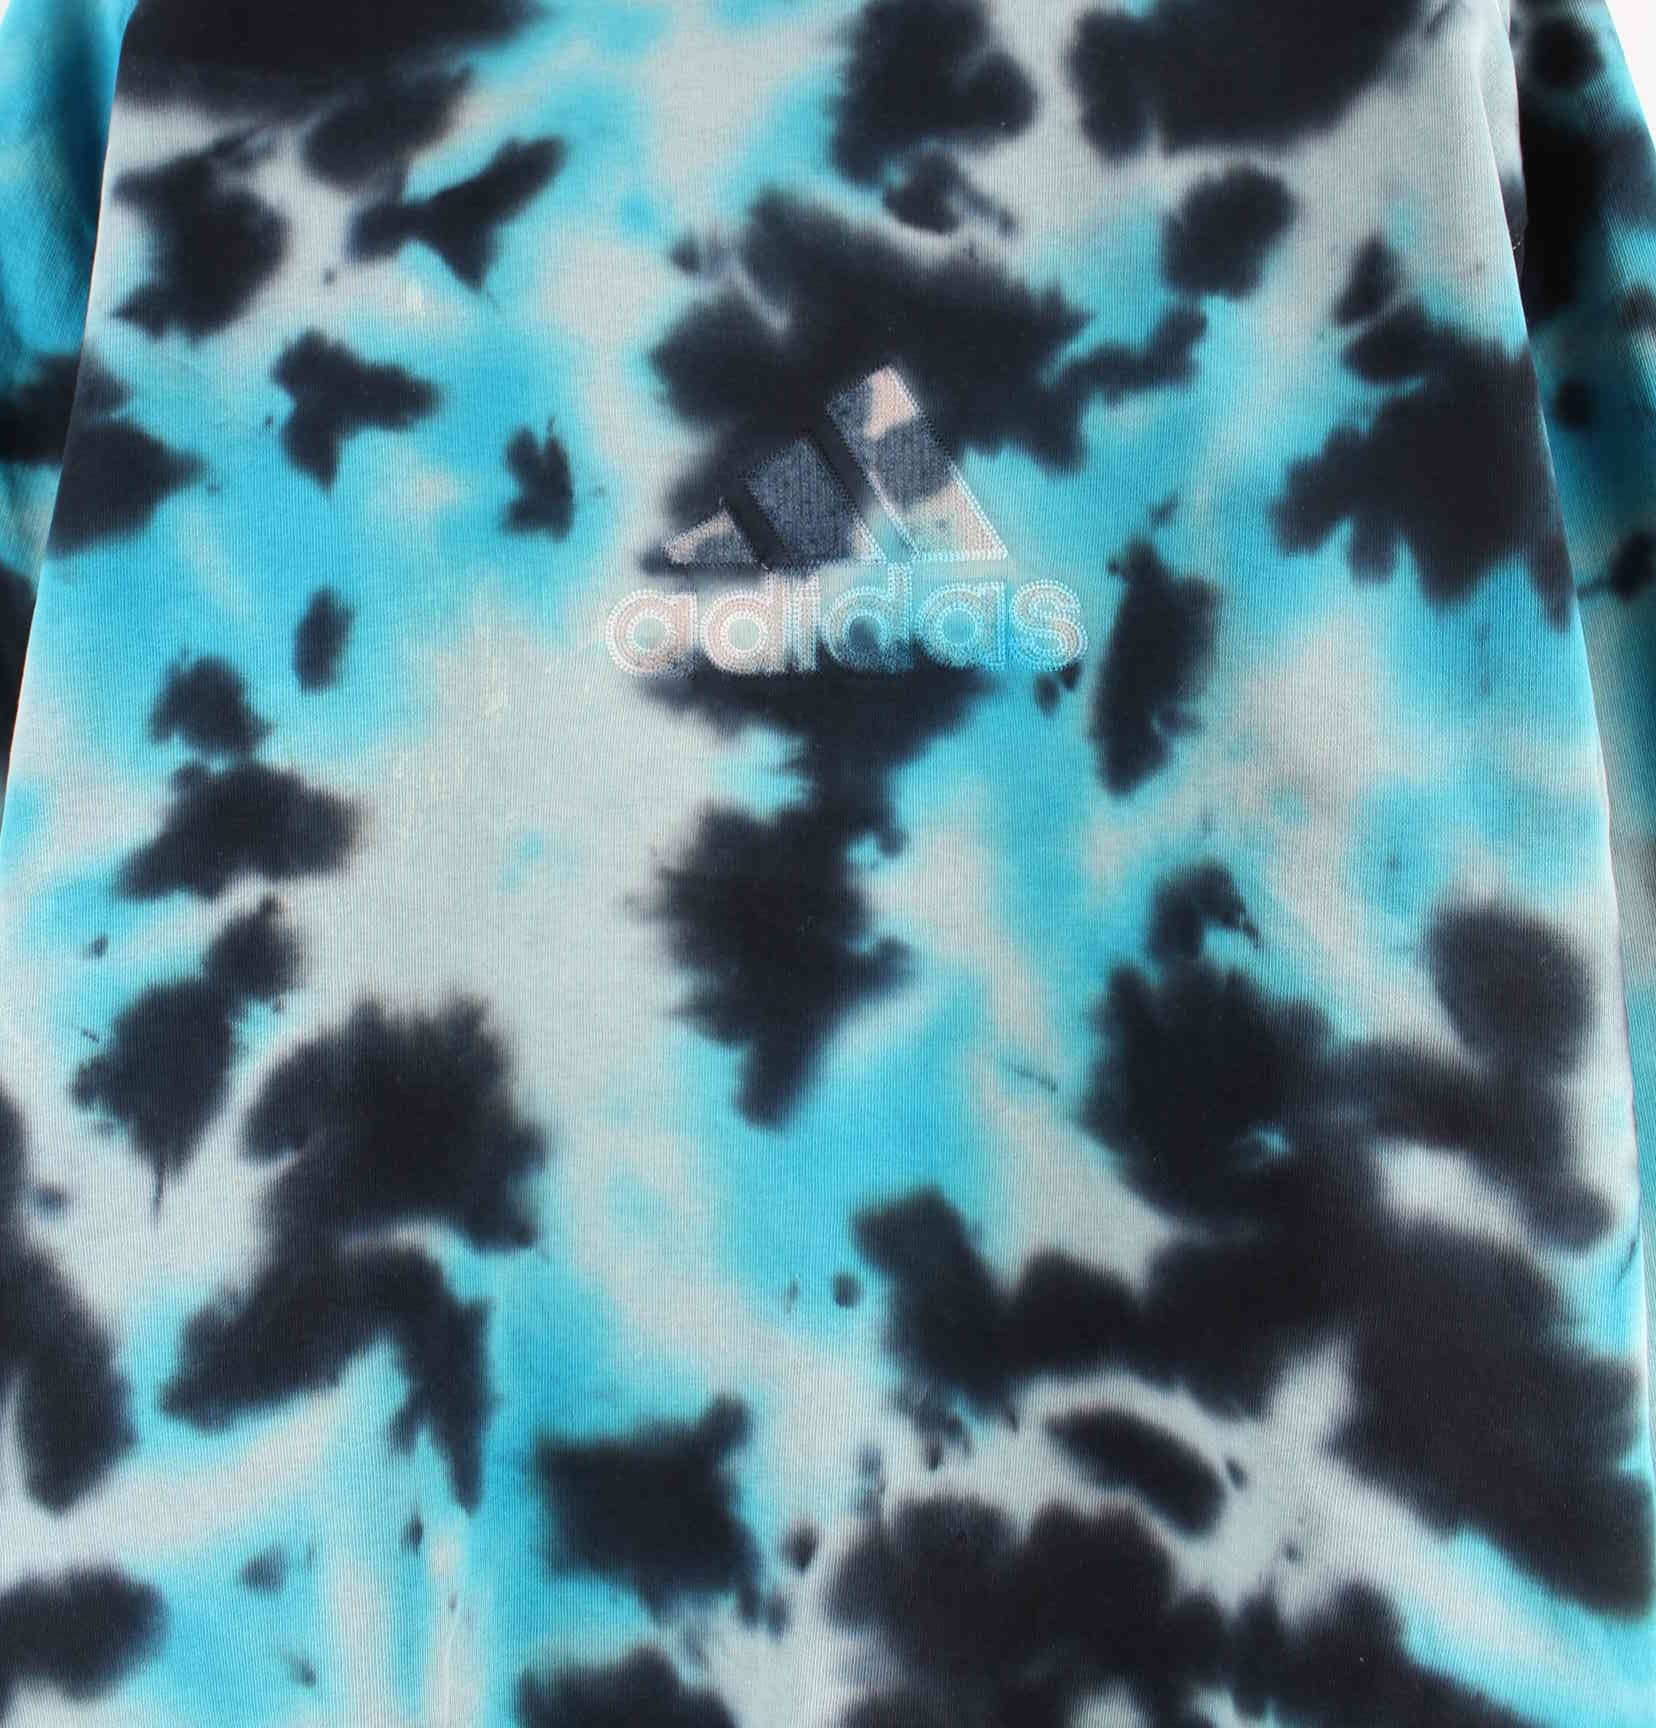 Adidas y2k Embroidered Tie Dye Sweater Blau L (detail image 1)